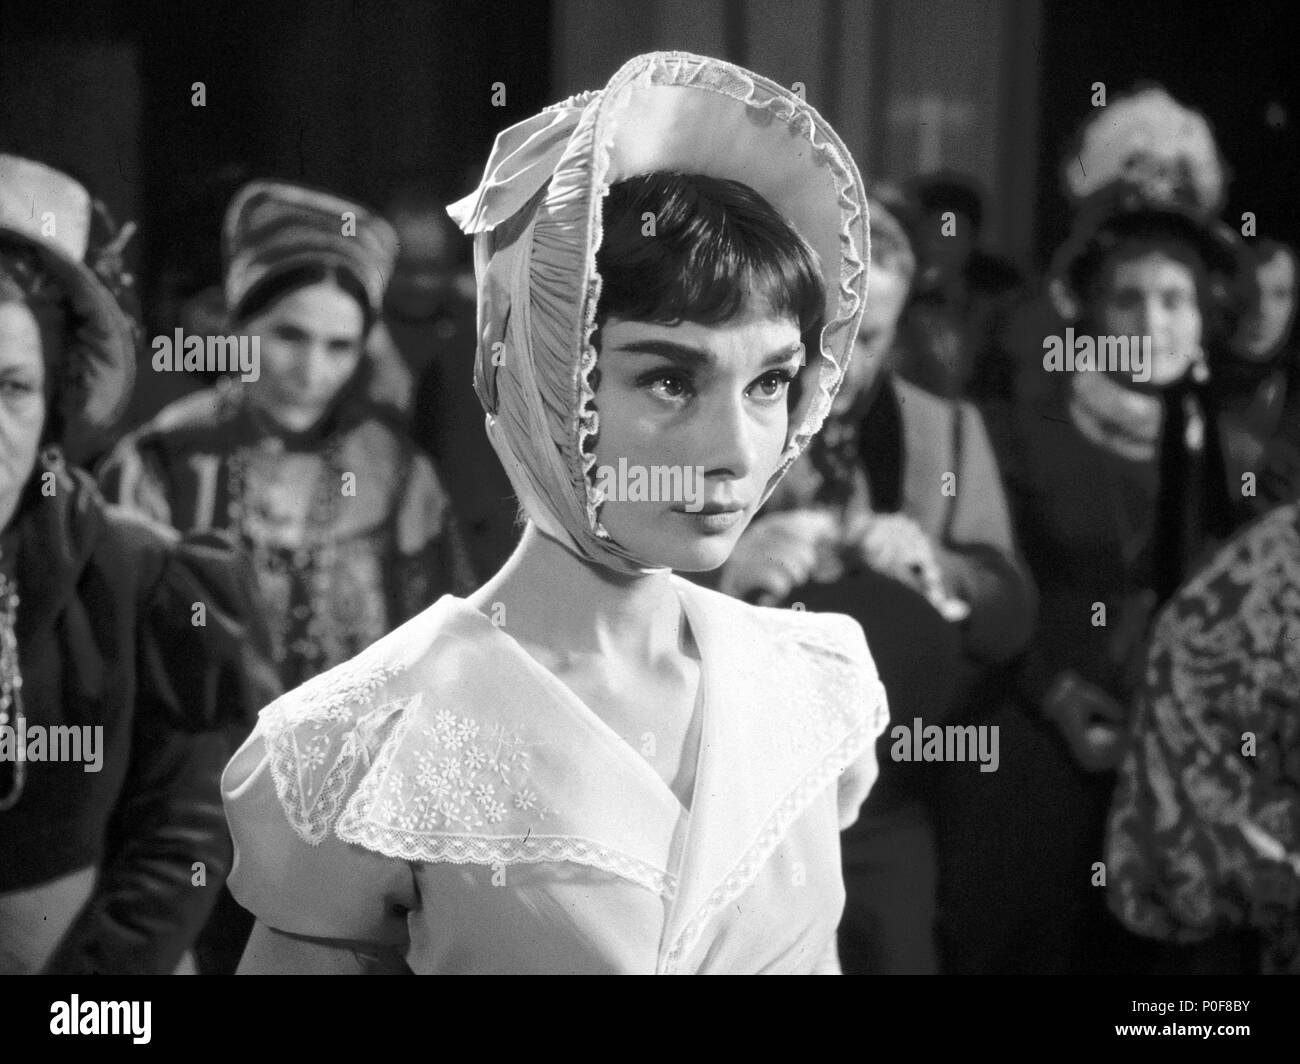 Italian fashion historic Black and White Stock Photos & Images - Alamy